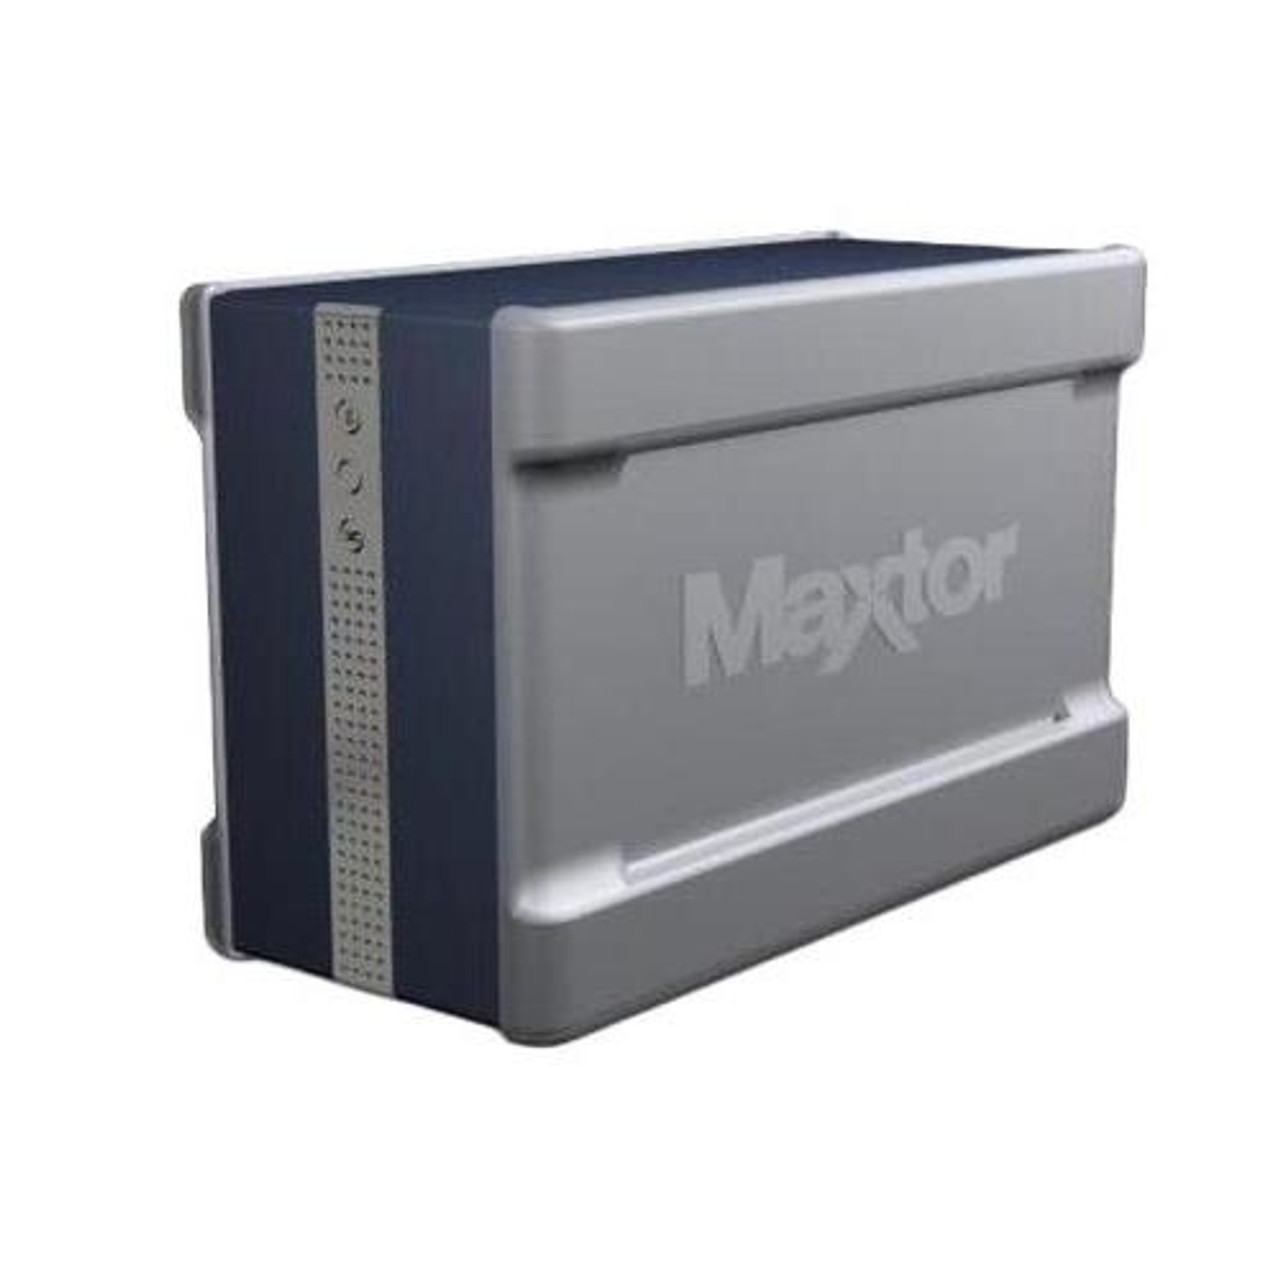 H14P200 Maxtor Shared Storage